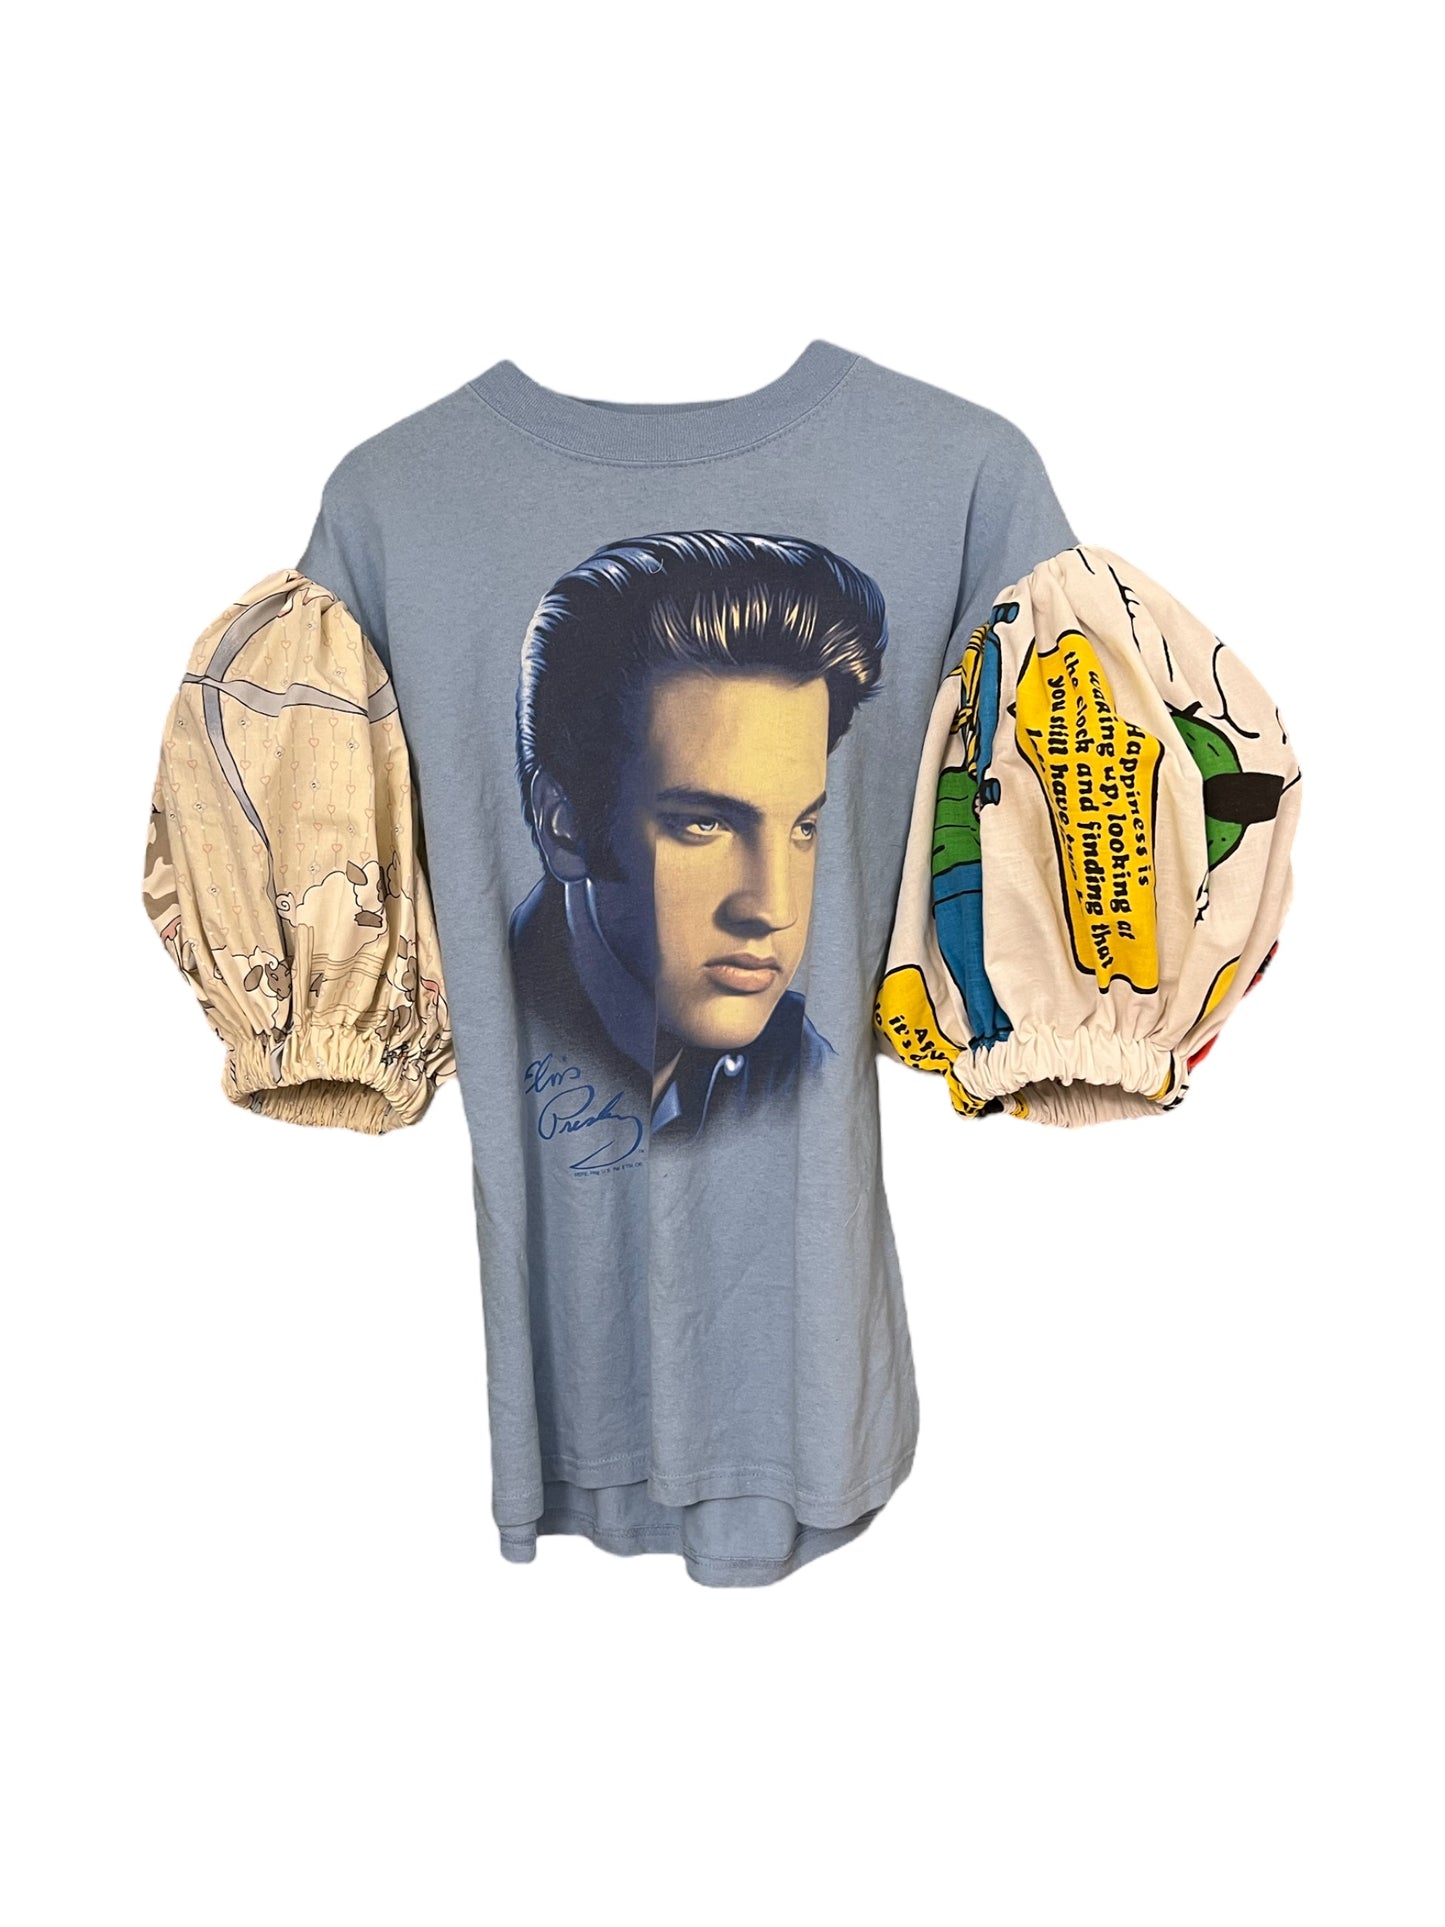 The puff tshirt in Elvis